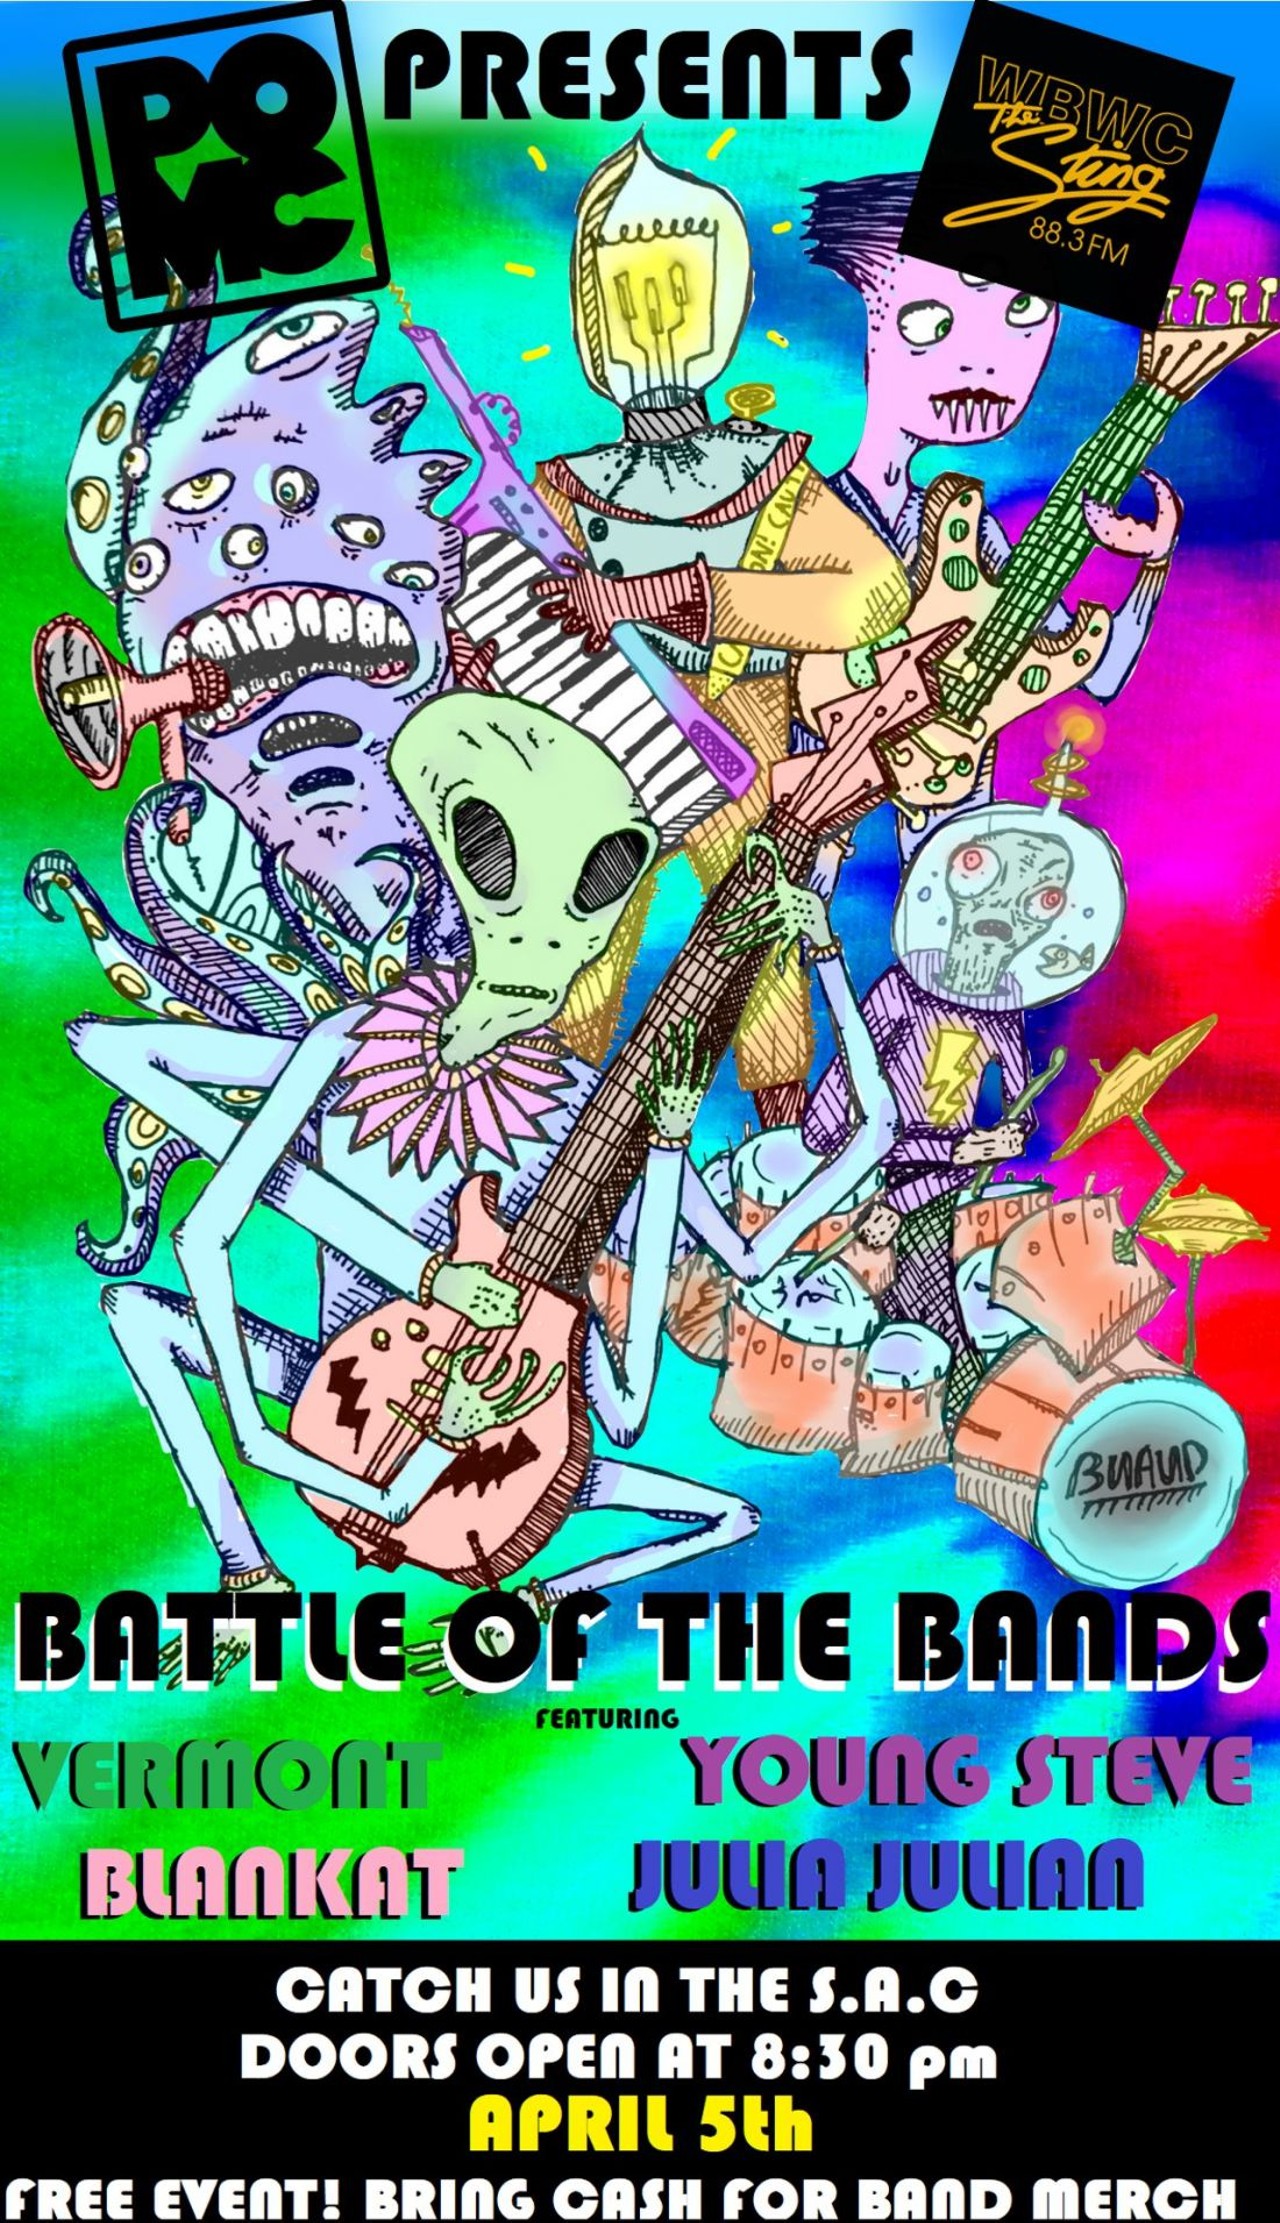  Battle of the Bands at Baldwin Wallace University
Fri, April 5
Poster Artwork